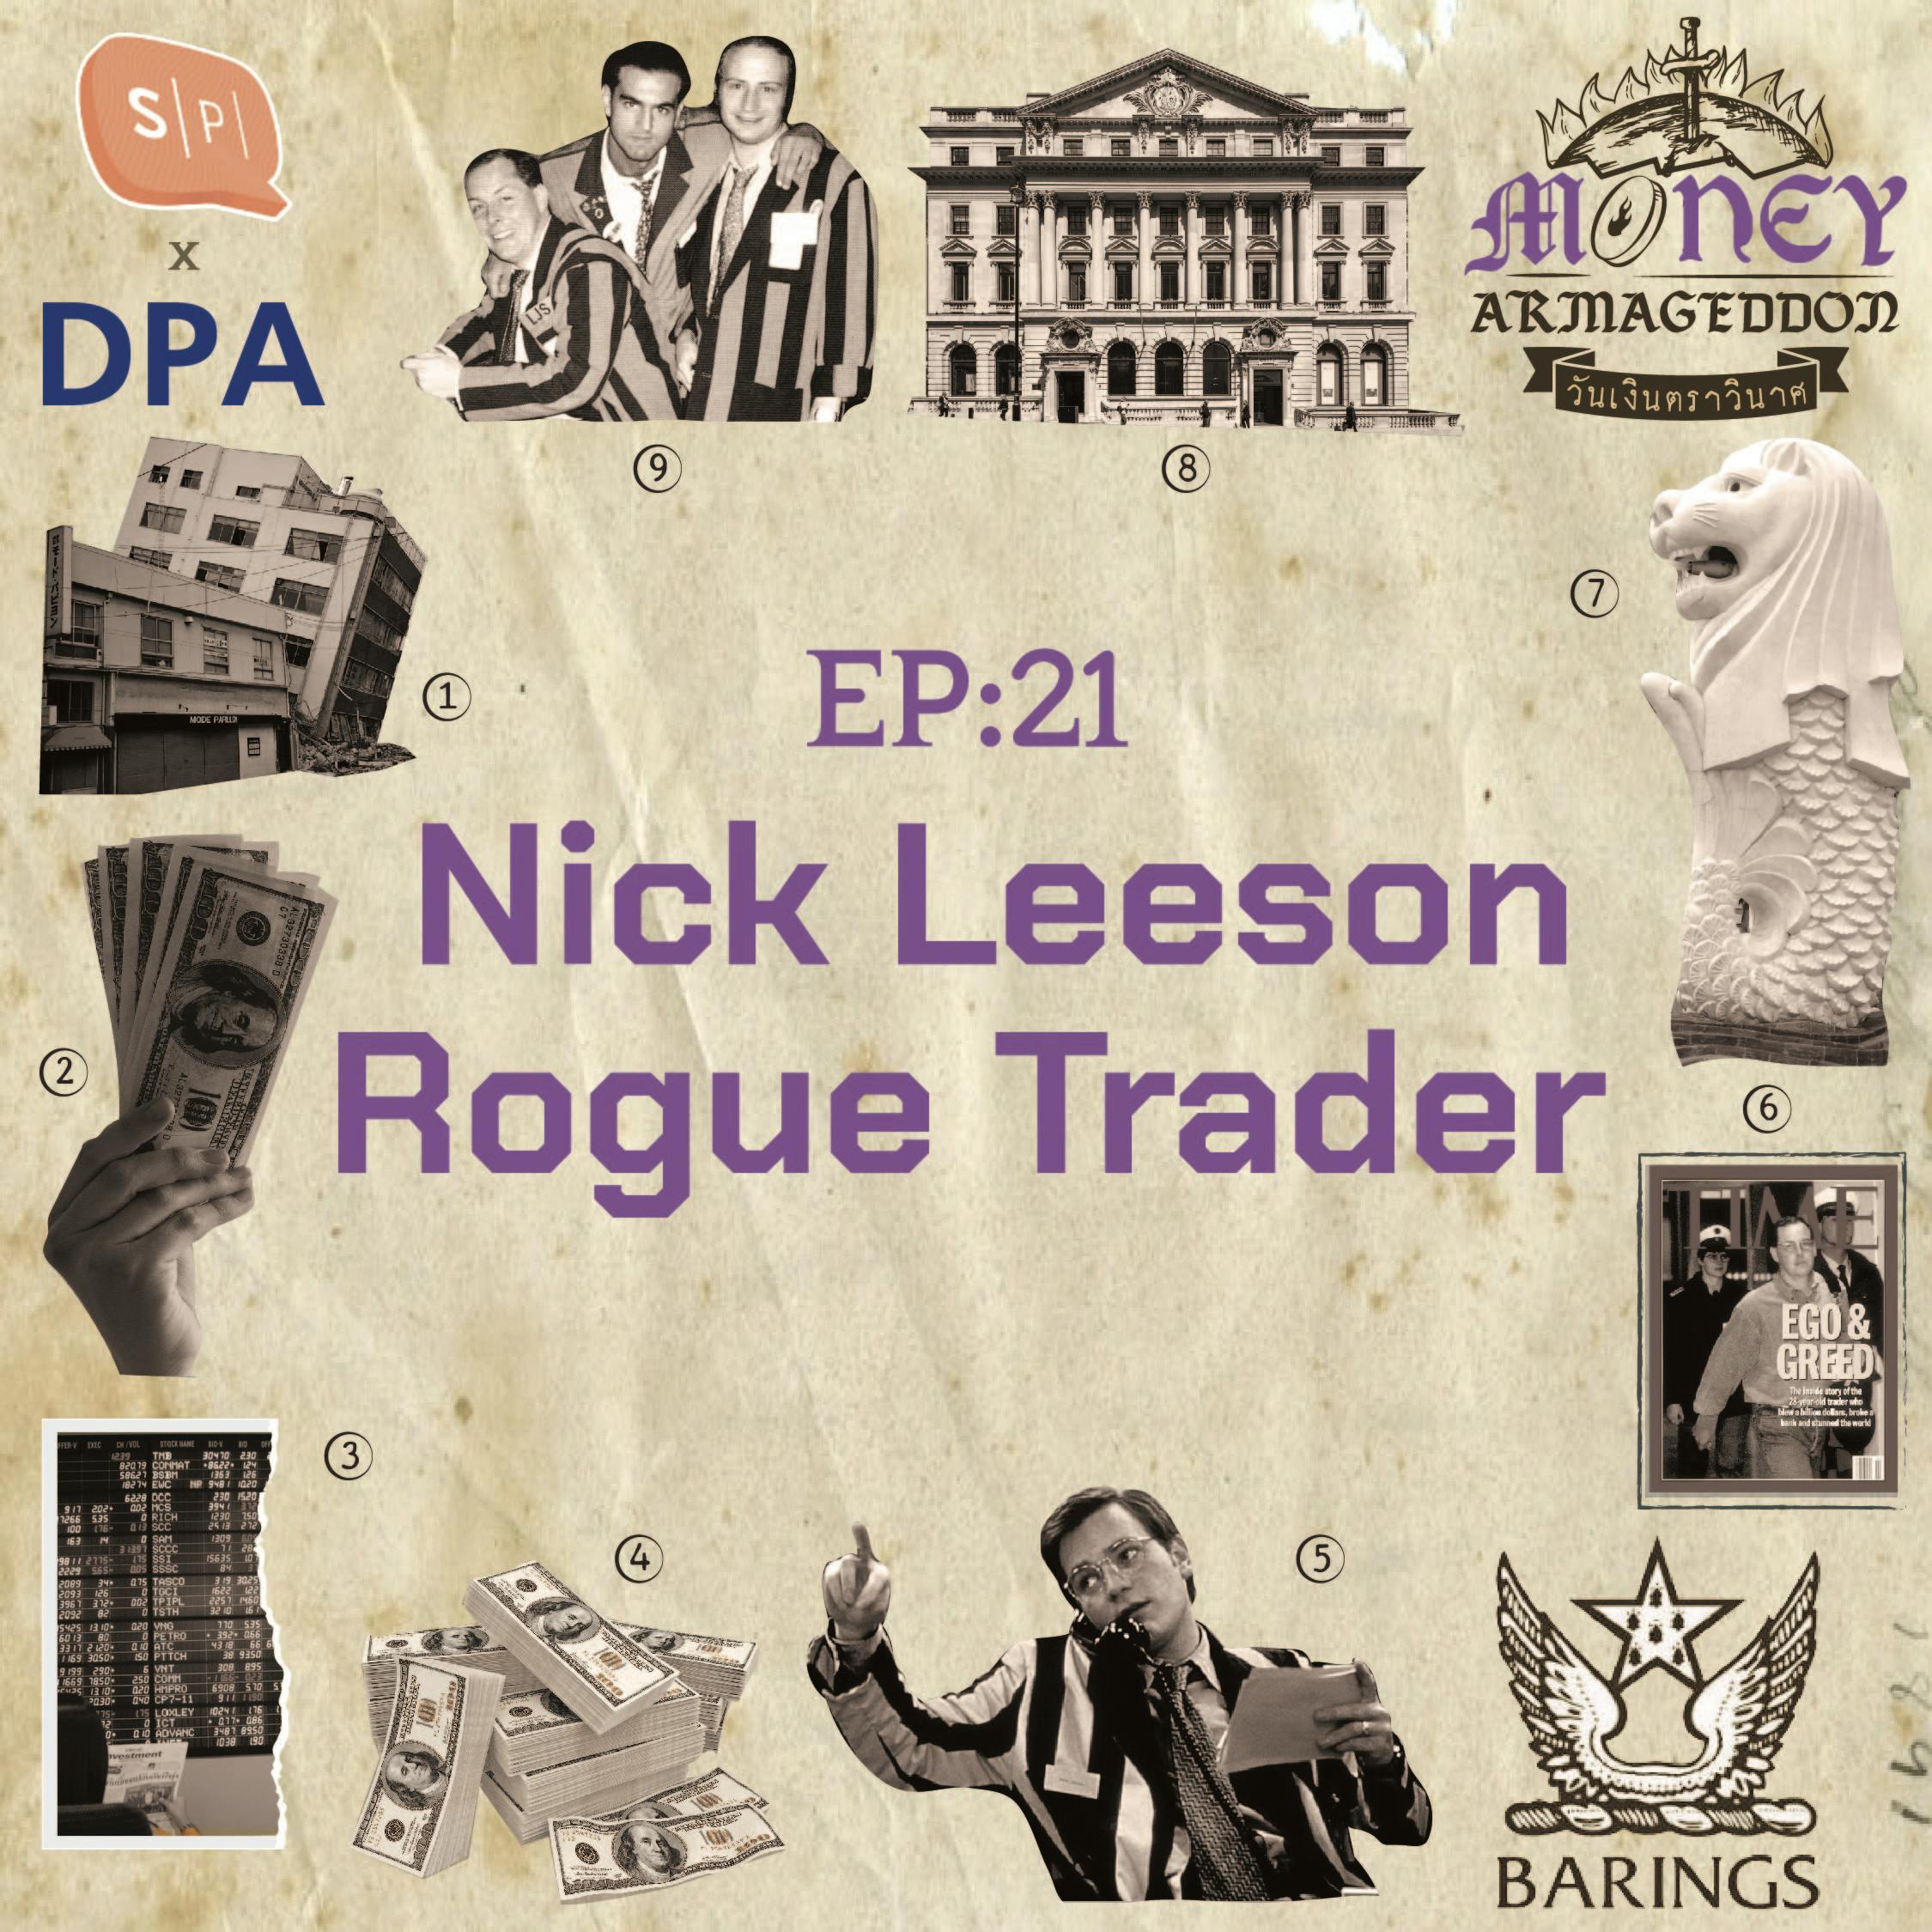 Nick Leeson เทรดเดอร์ผู้ทำลายธนาคารเก่าแก่ในอังกฤษจนพังพินาศ | Money Armageddon EP21